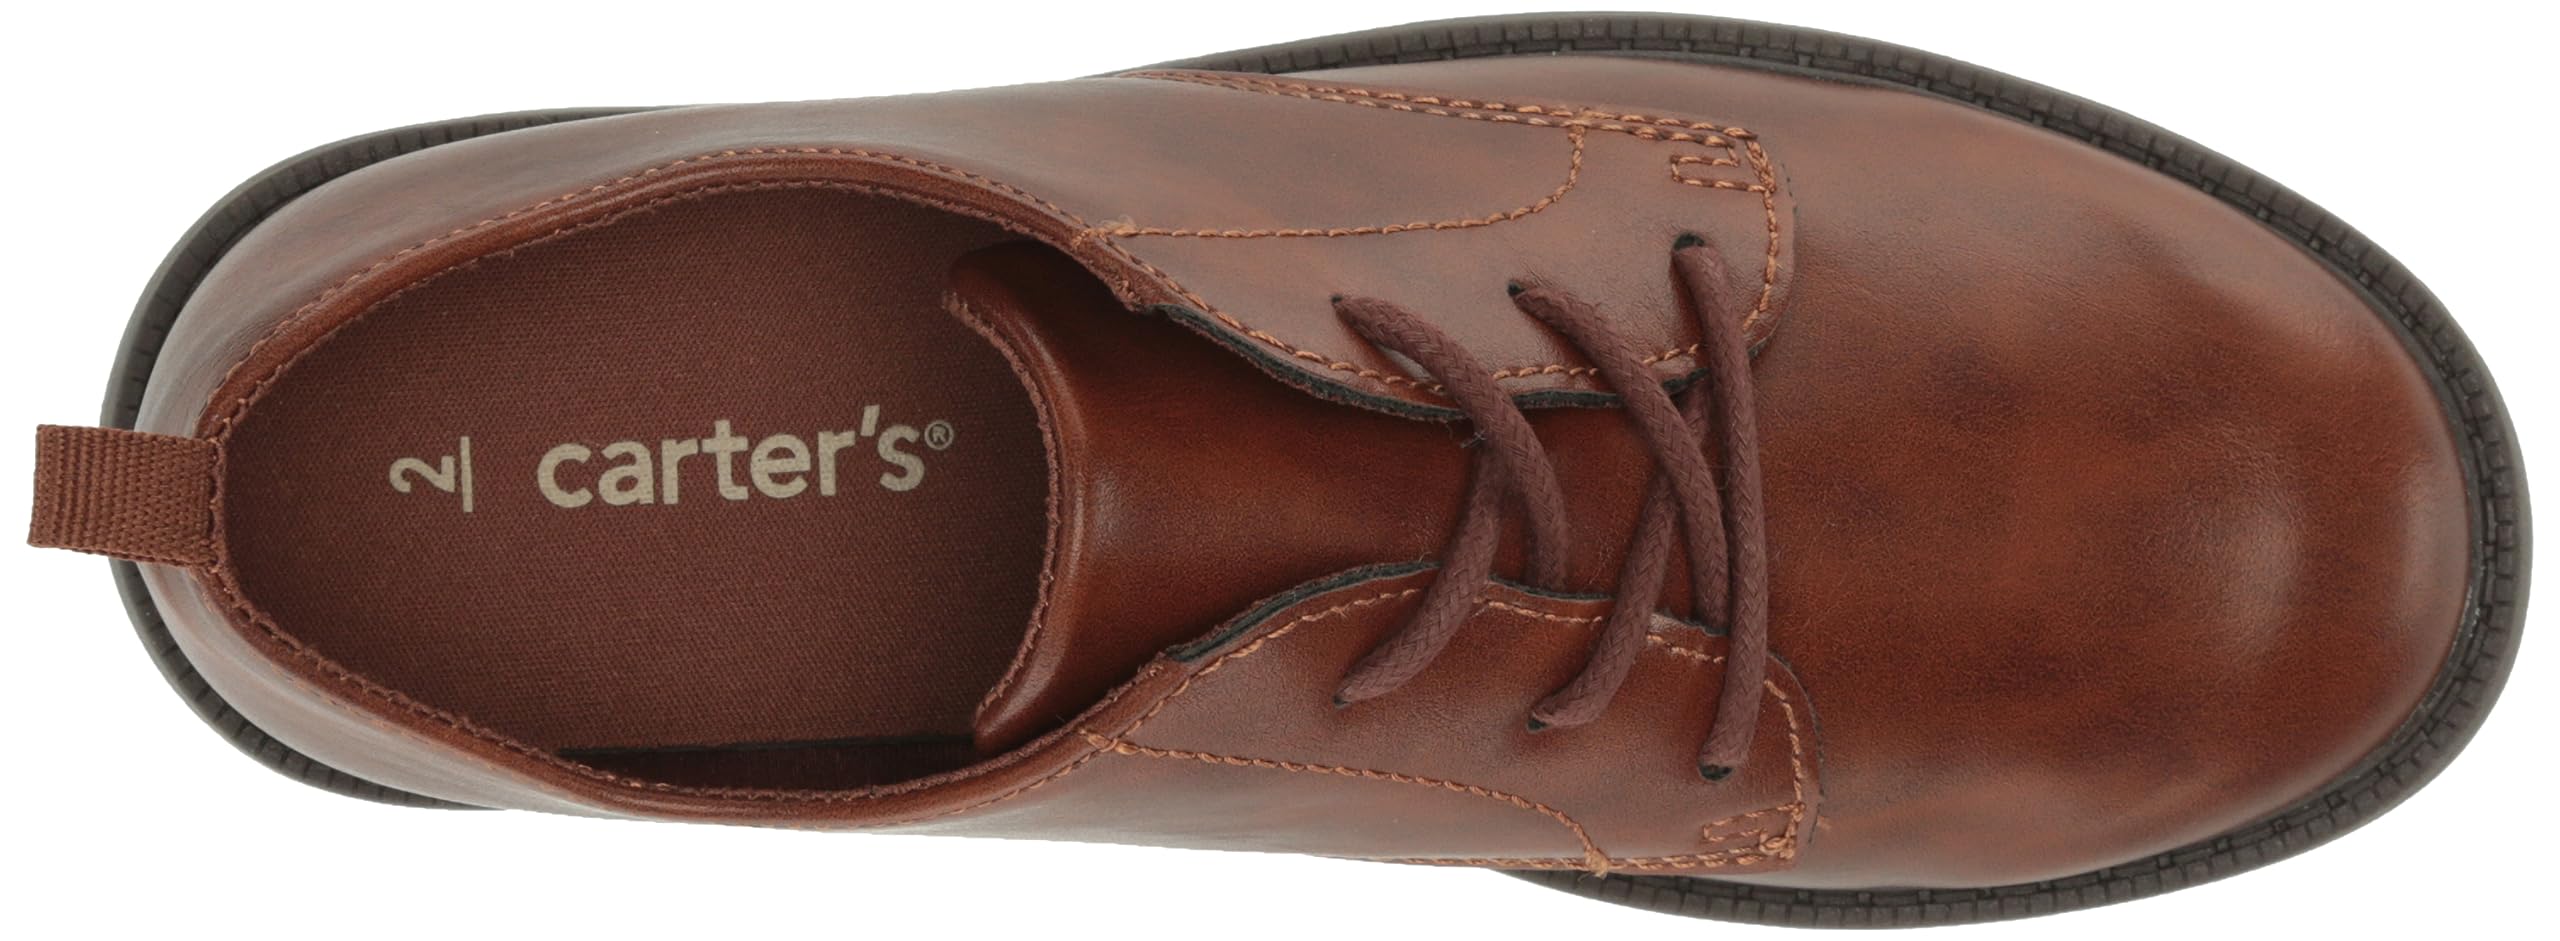 Carter's Unisex-Child Spencer Dress Shoe